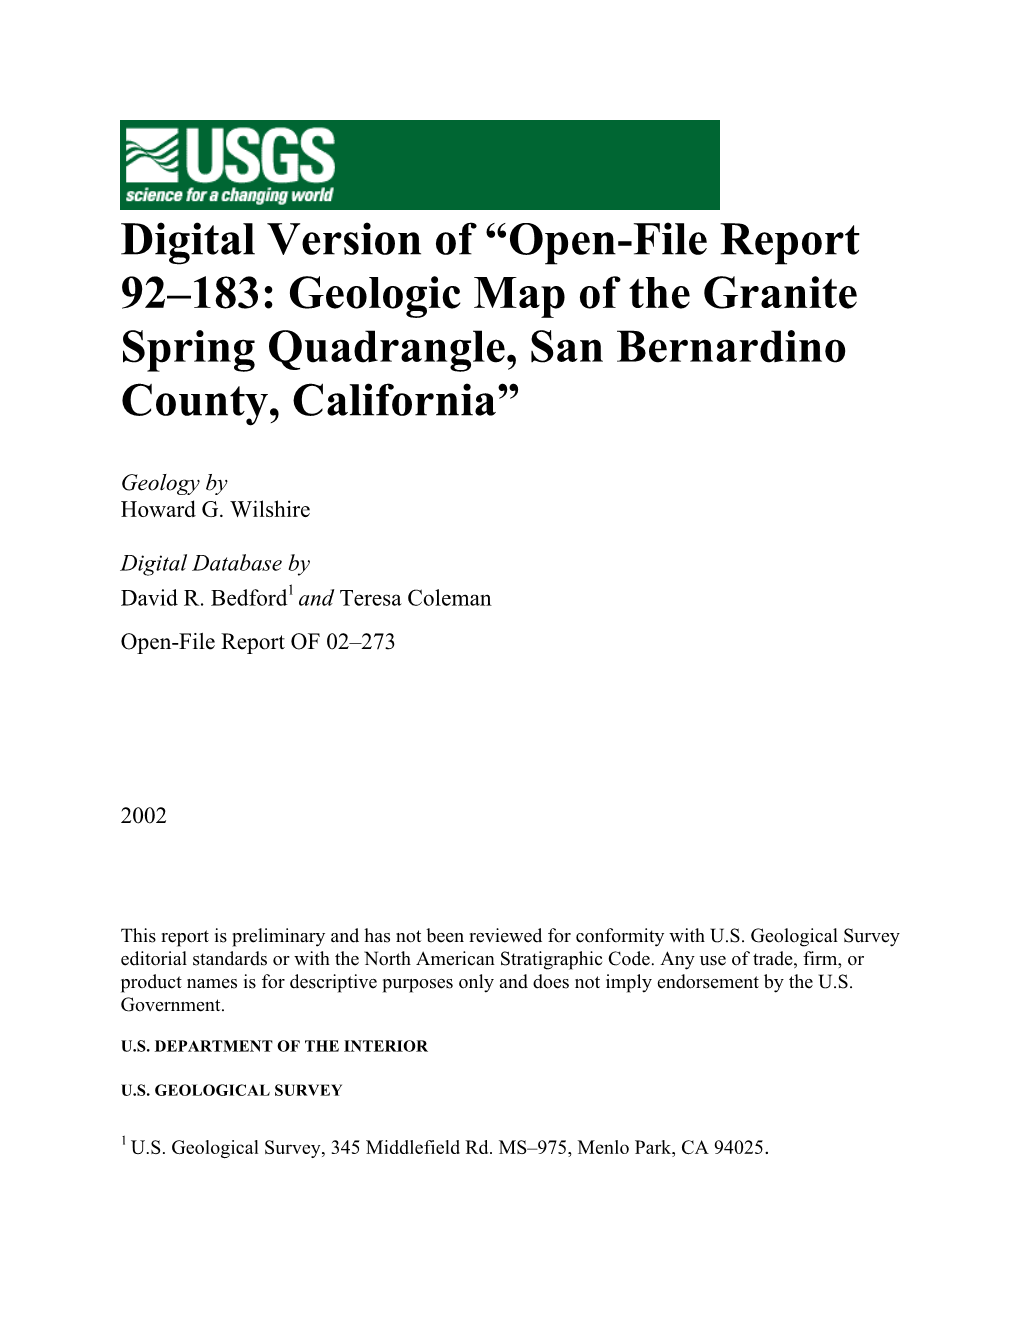 Report 92–183: Geologic Map of the Granite Spring Quadrangle, San Bernardino County, California”